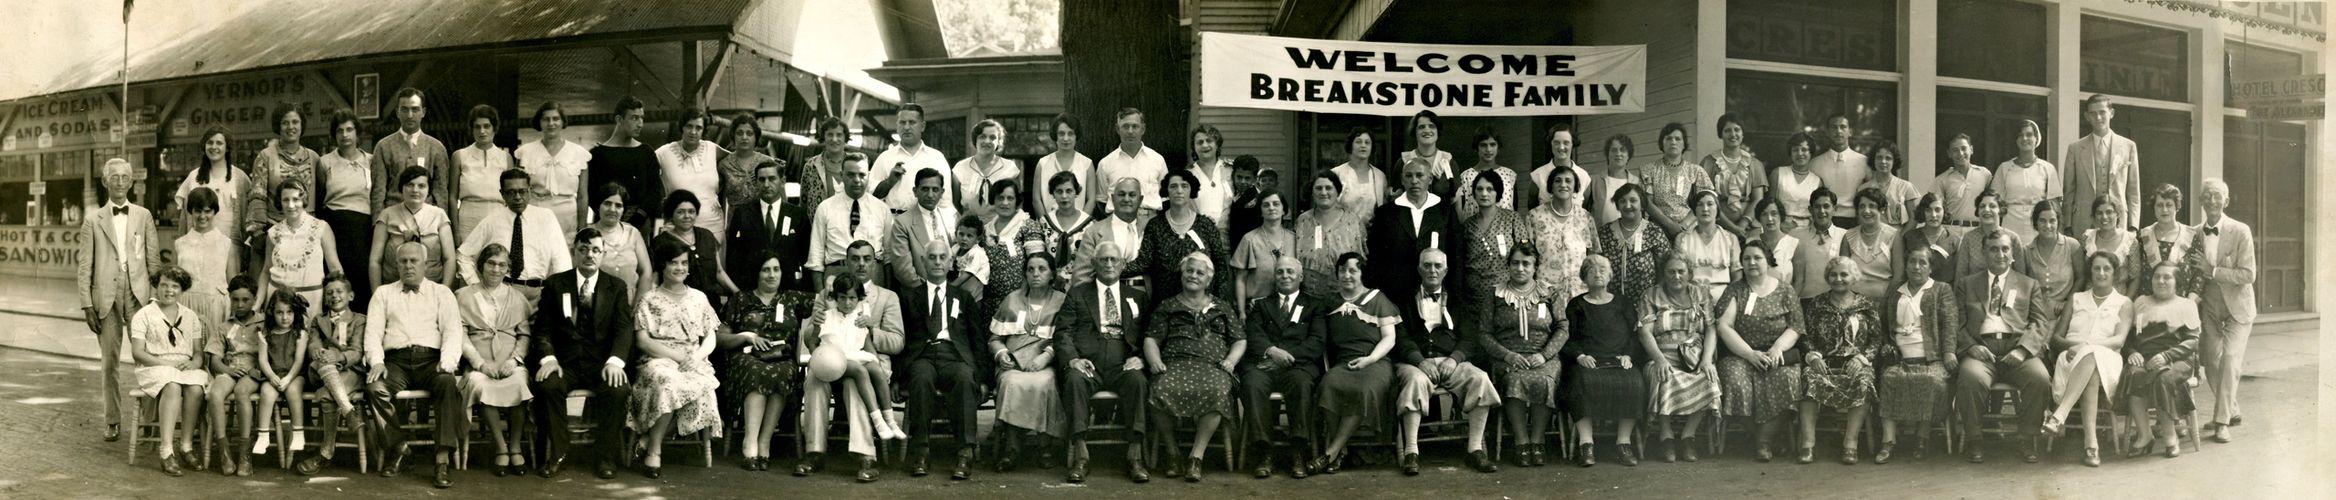 1930 Breakstone Reunion.
Put in Bay, Ohio